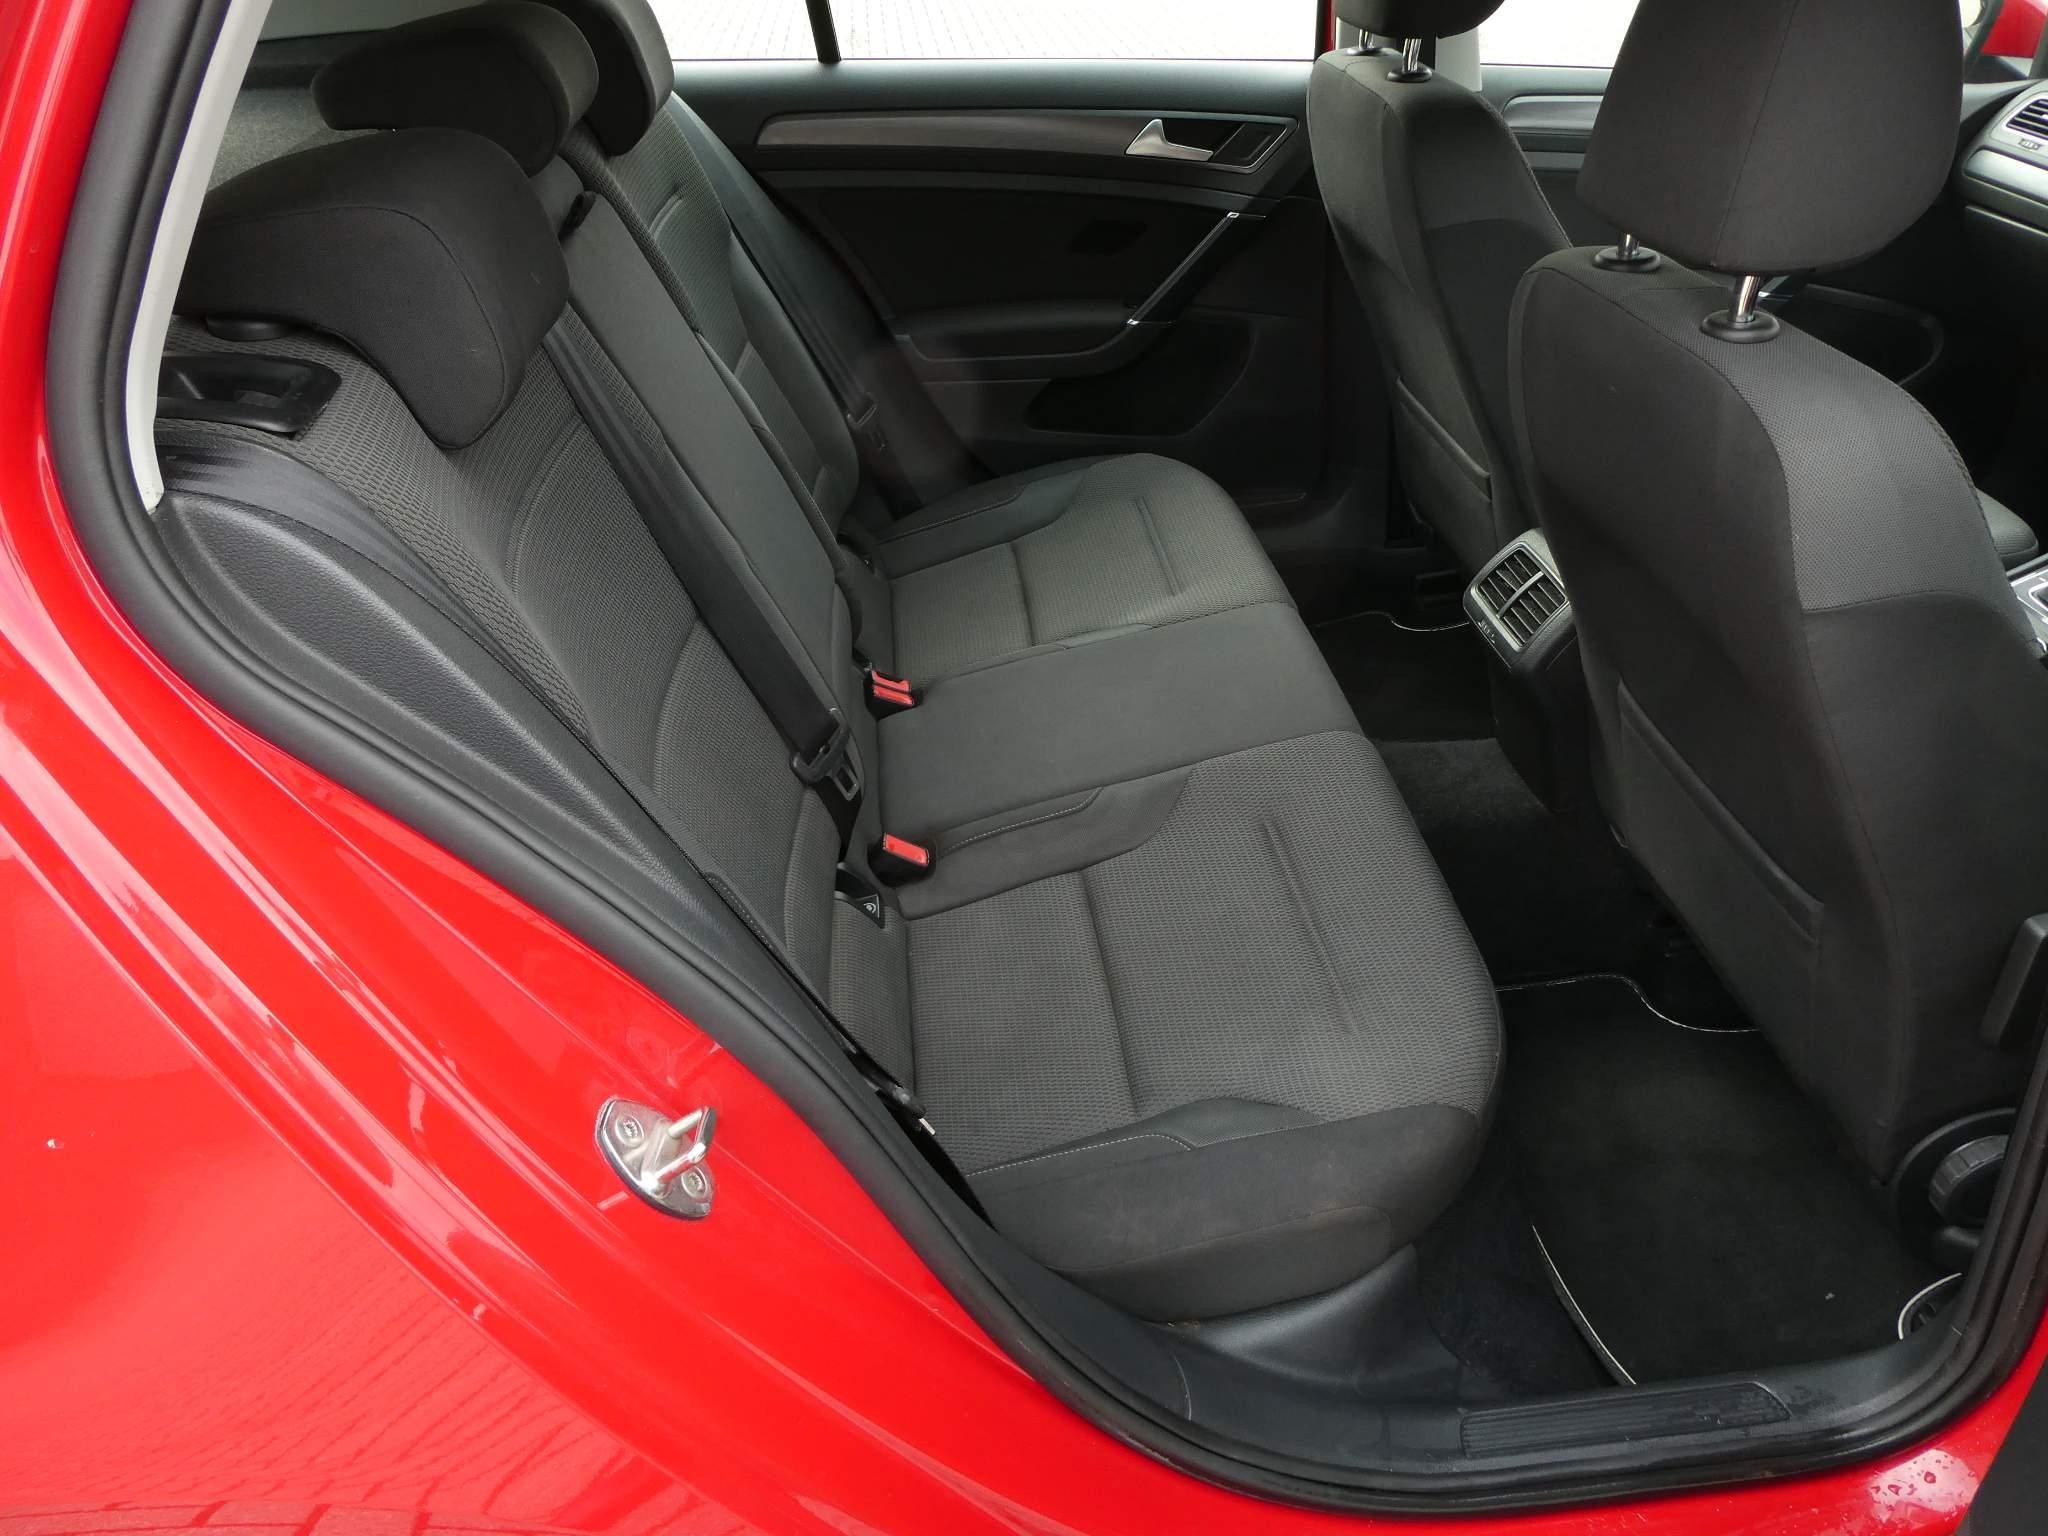 Volkswagen Golf 1.4 TSI BlueMotion Tech SE Nav Hatchback 5dr Petrol DSG Euro 6 (s/s) (125 ps) (GC17HSO) image 16